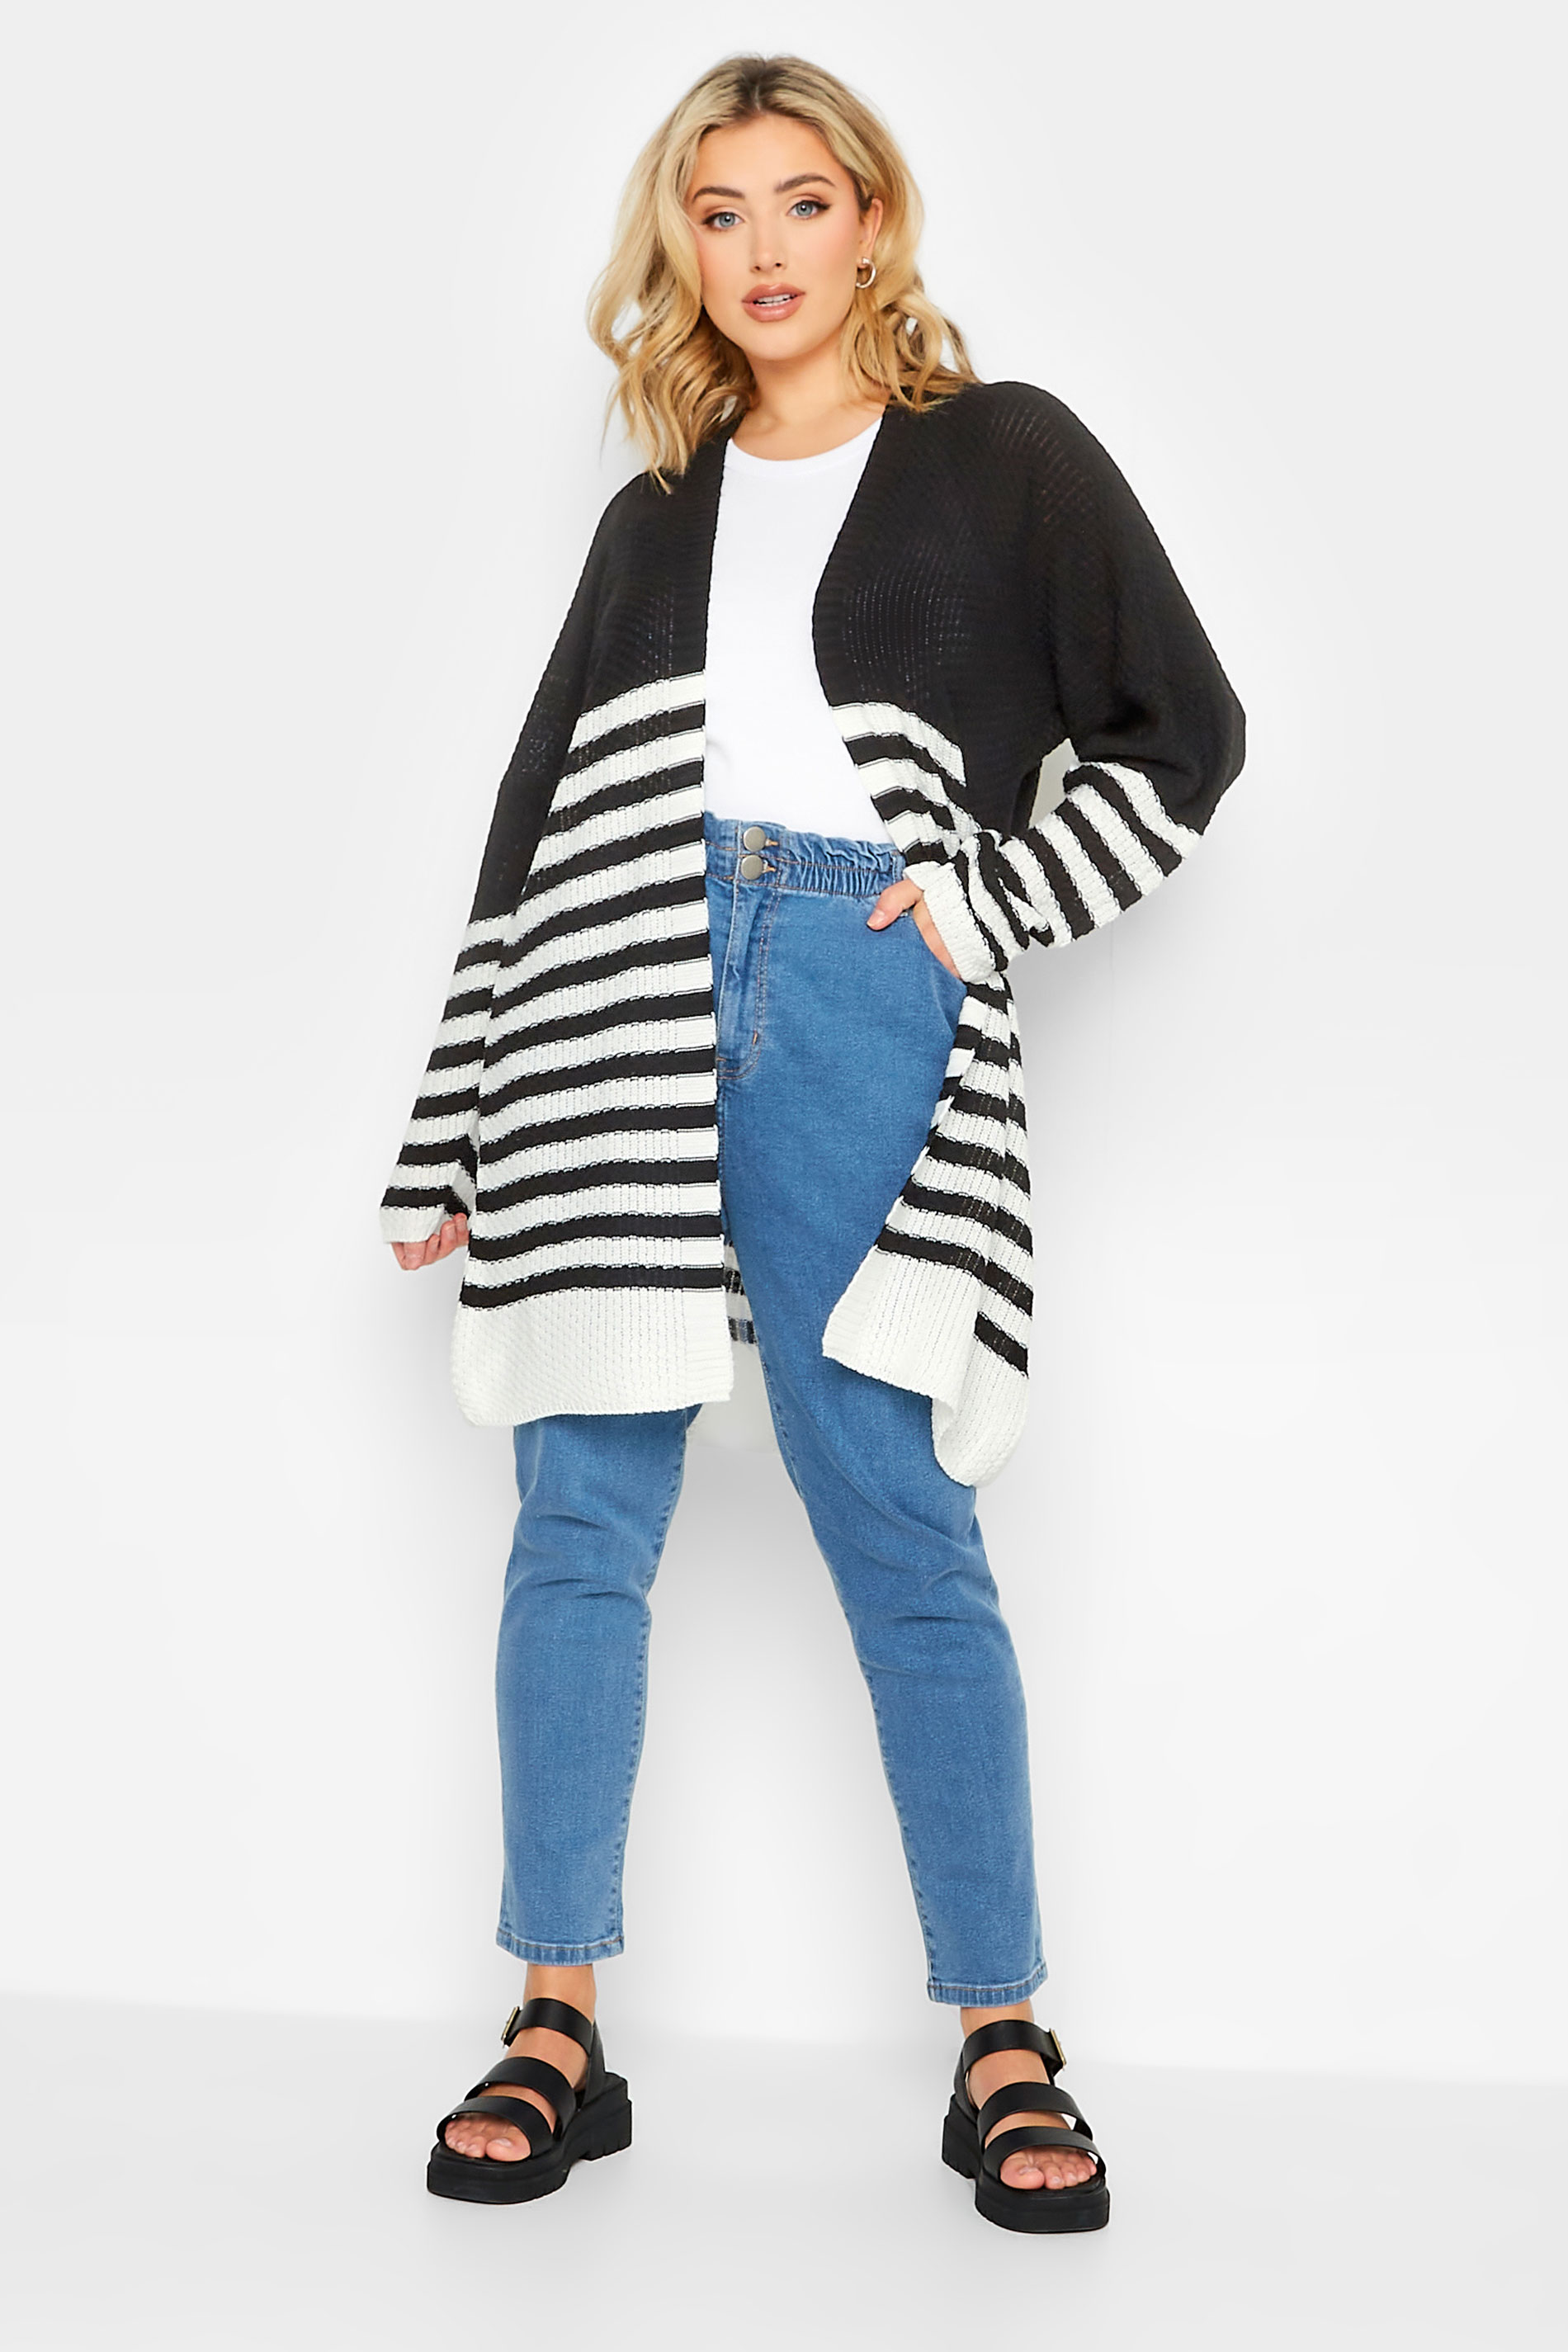 YOURS Plus Size Black & White Stripe Cardigan | Yours Clothing  3